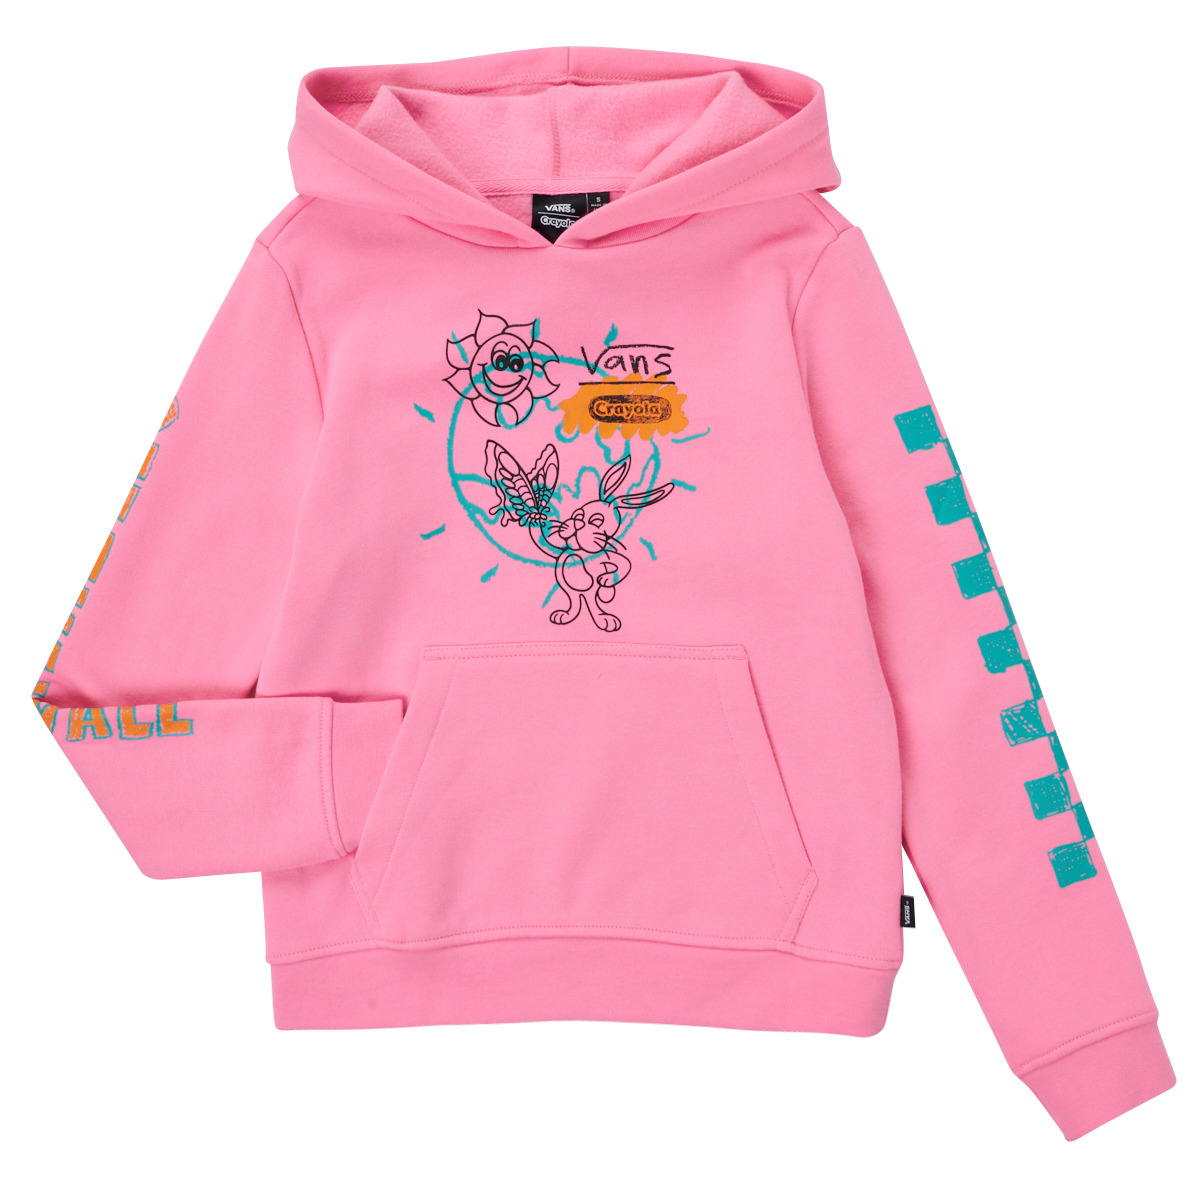 Vans - delivery | Child € CRAYOLA Fast HOODIE Pink Europe - VANS ! 57,60 sweaters Spartoo Clothing X